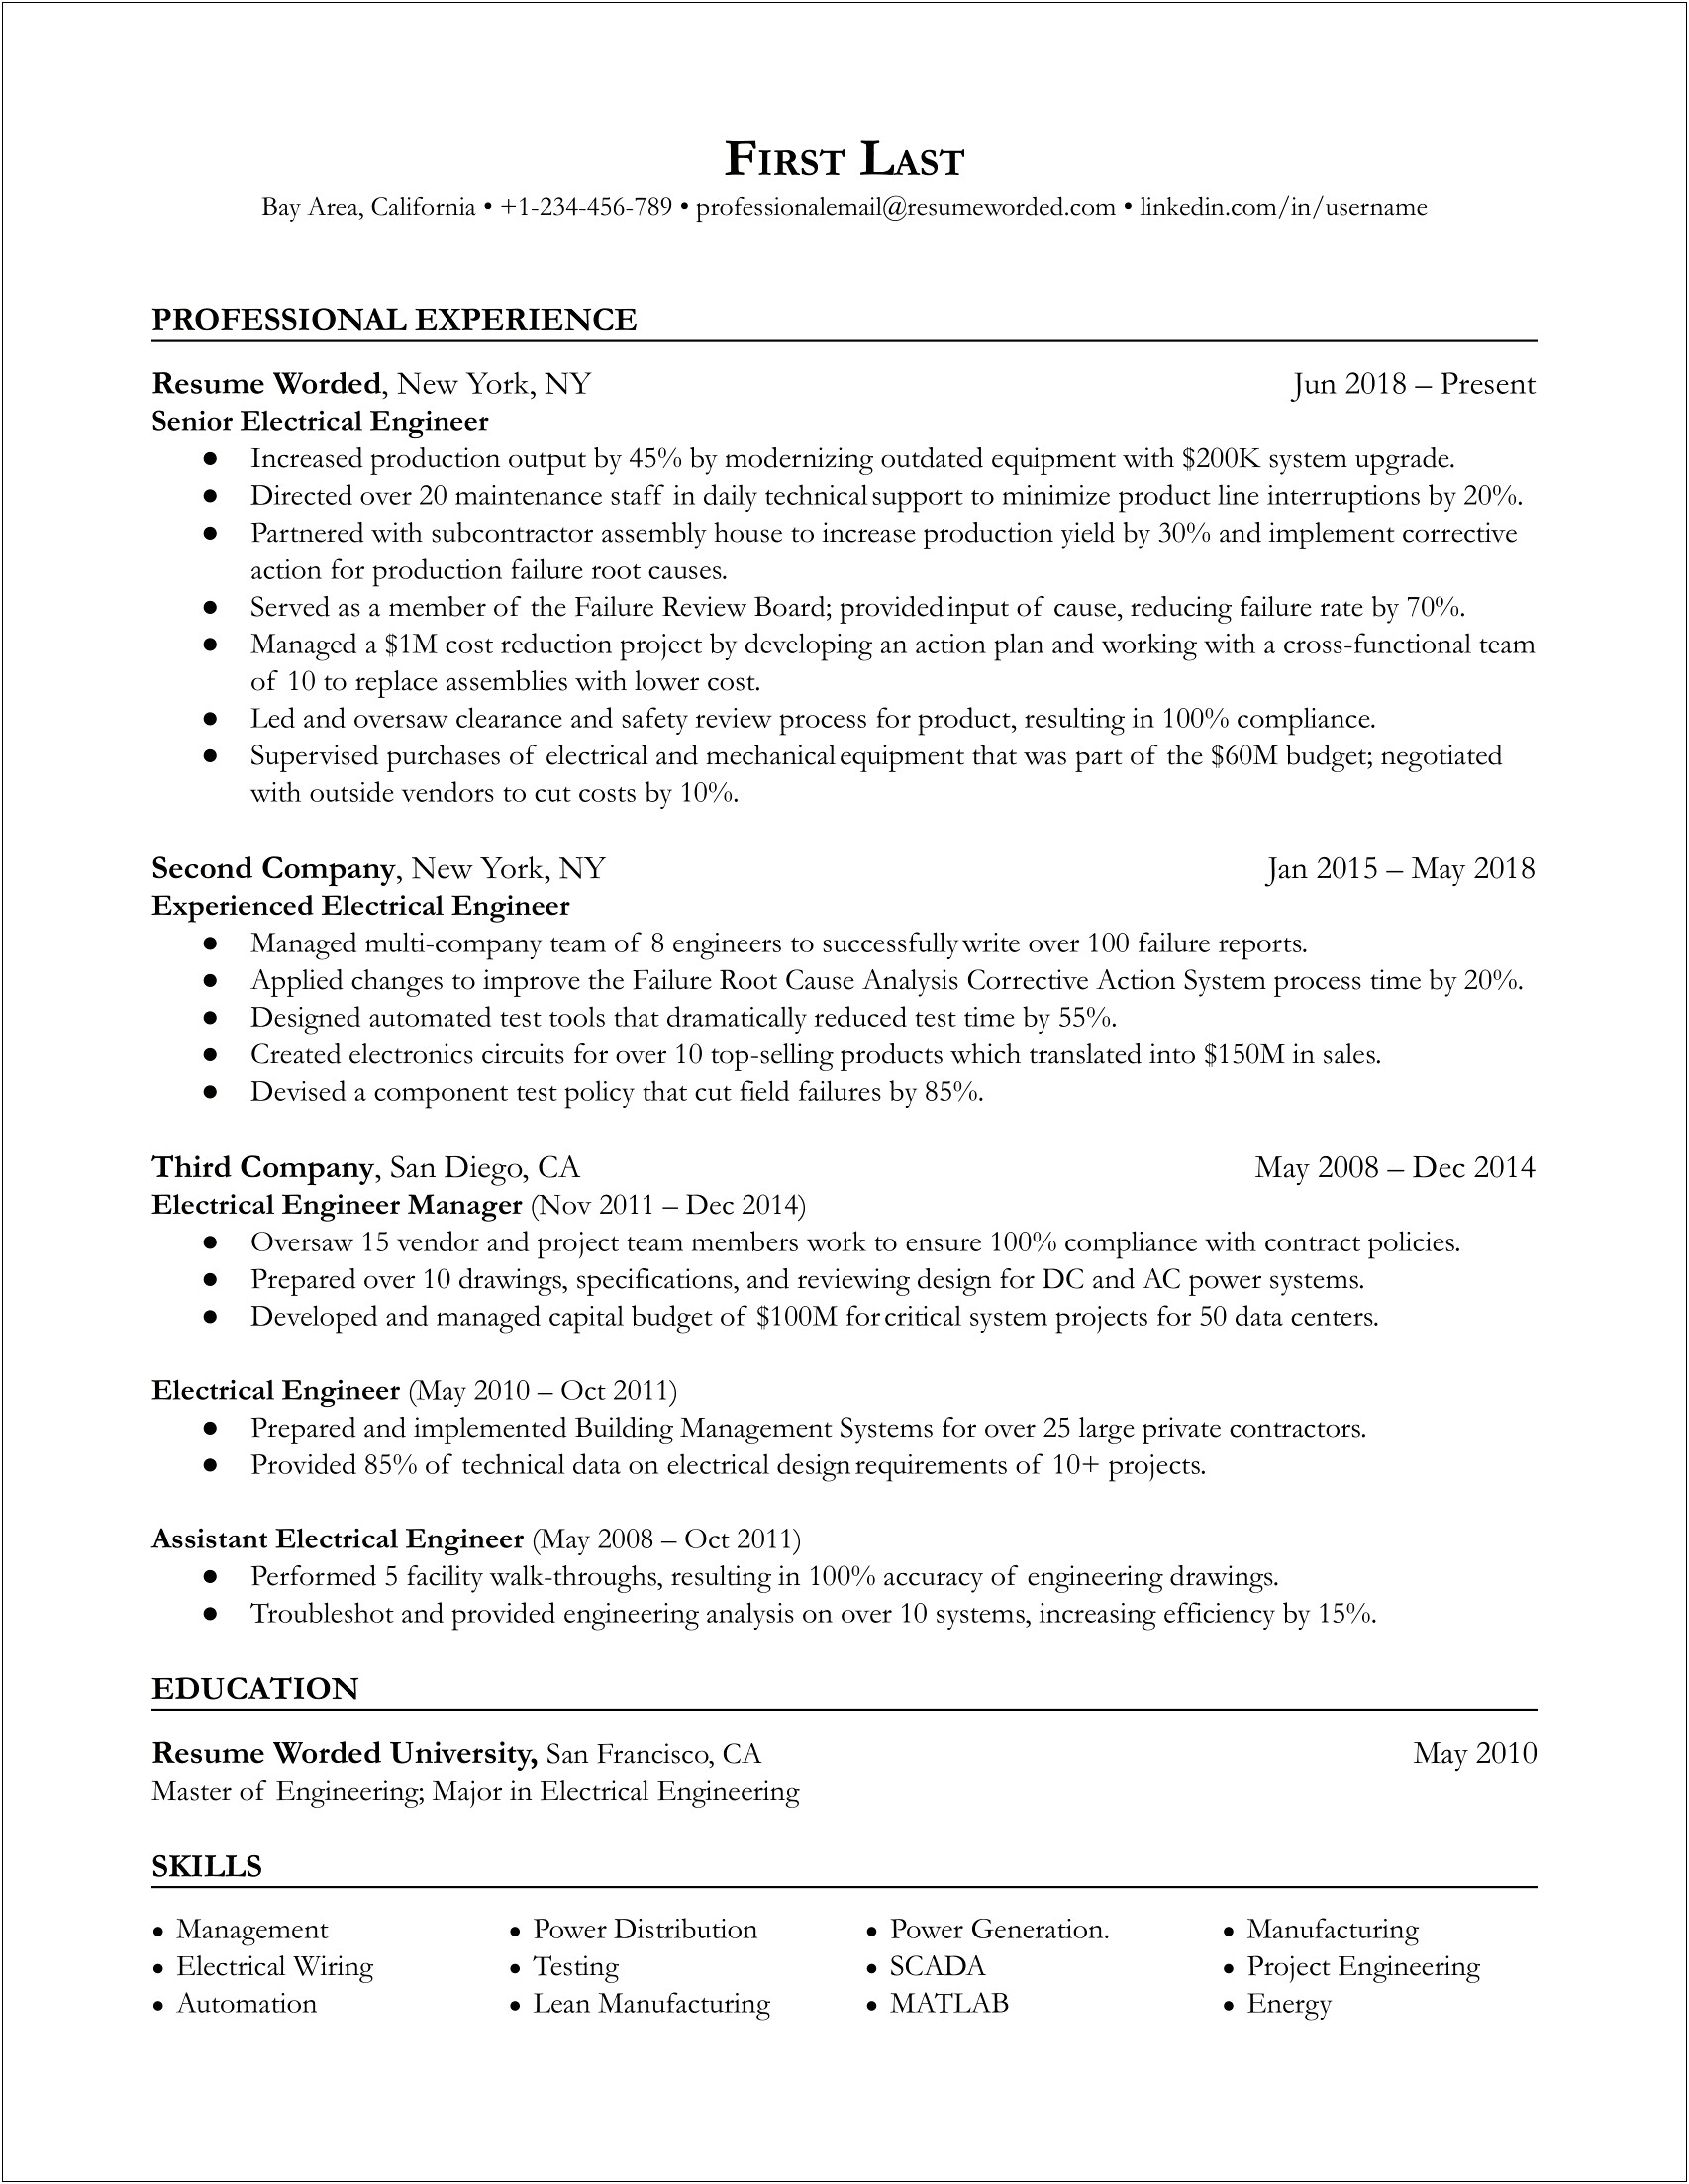 Electrician Assistant Job Description For Resume